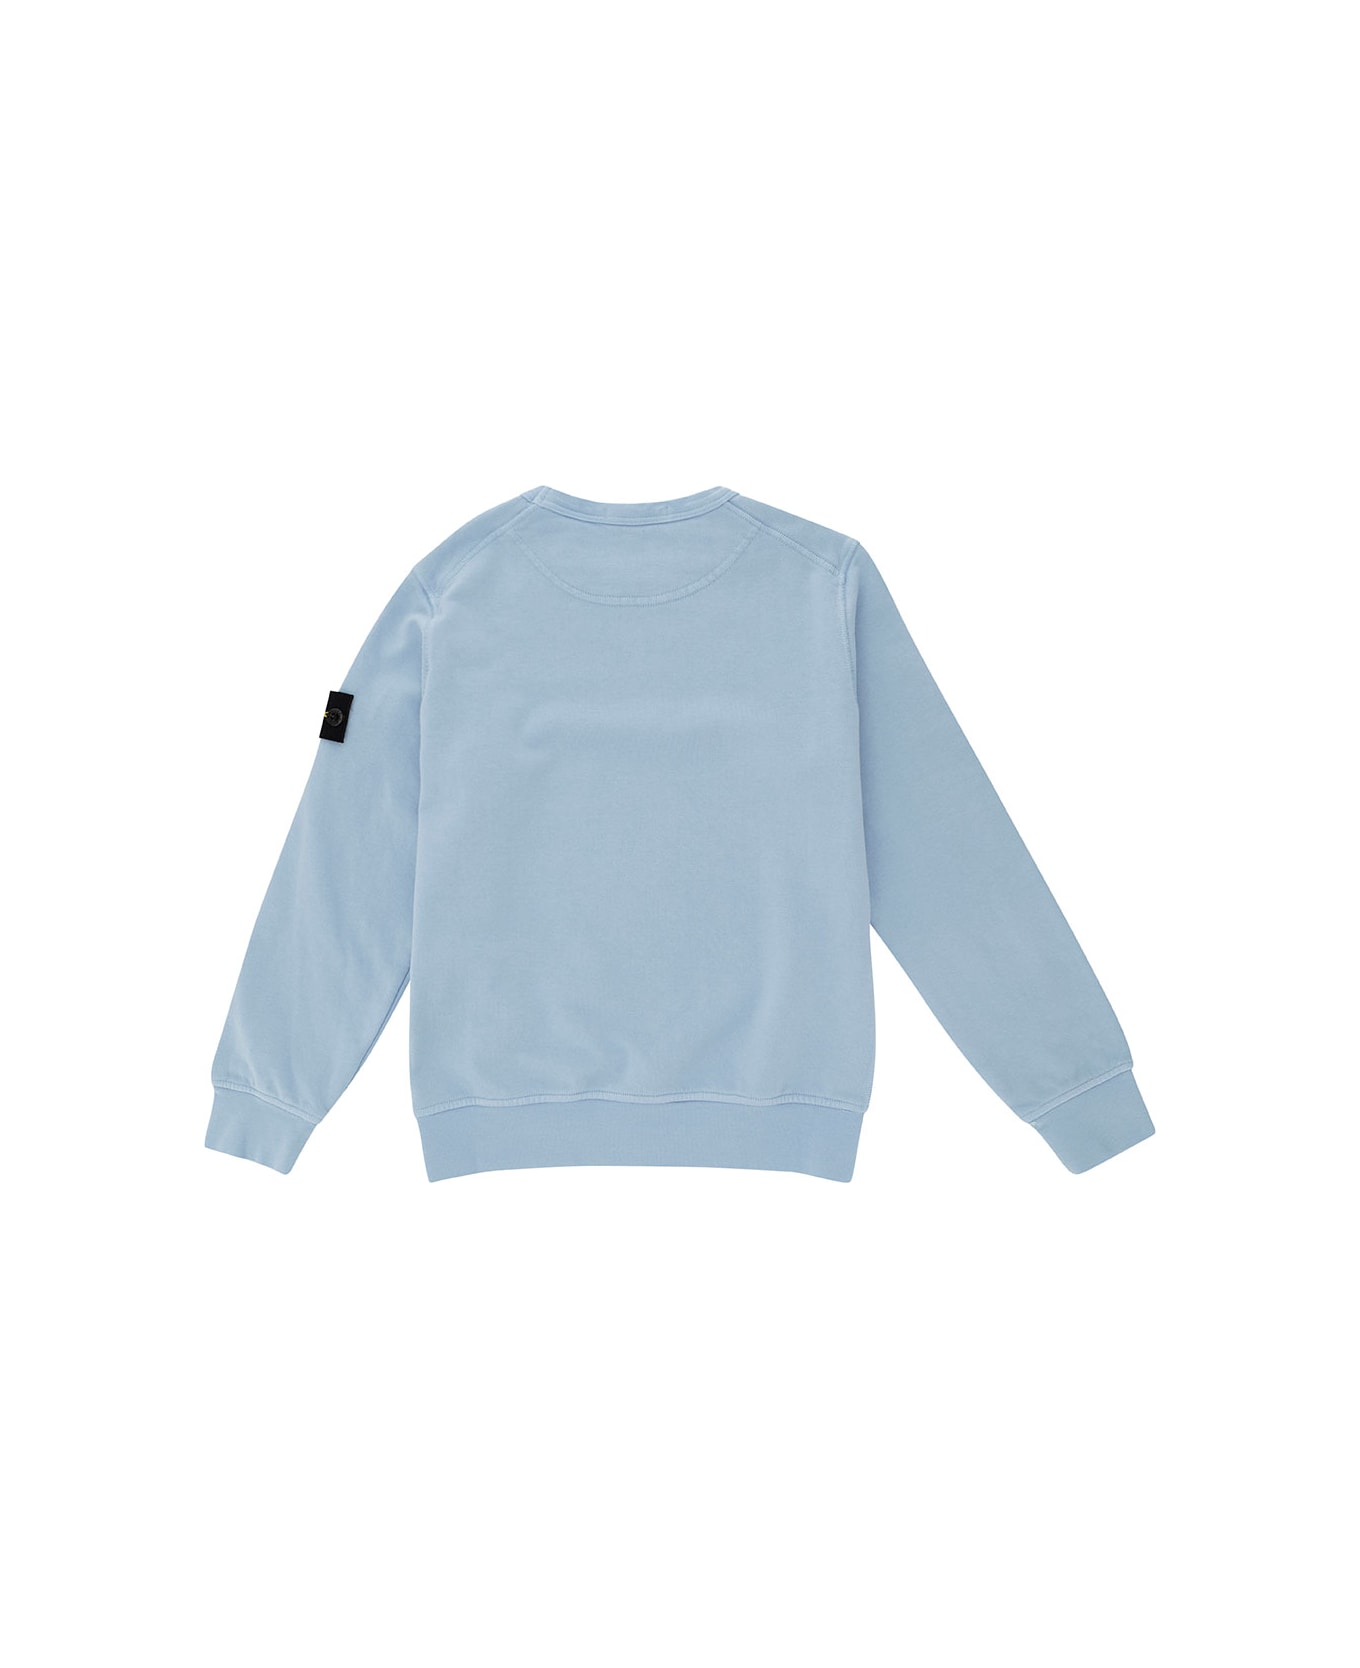 Stone Island Light Blue Crewneck Sweatshirt With Logo Patch In Cotton Boy